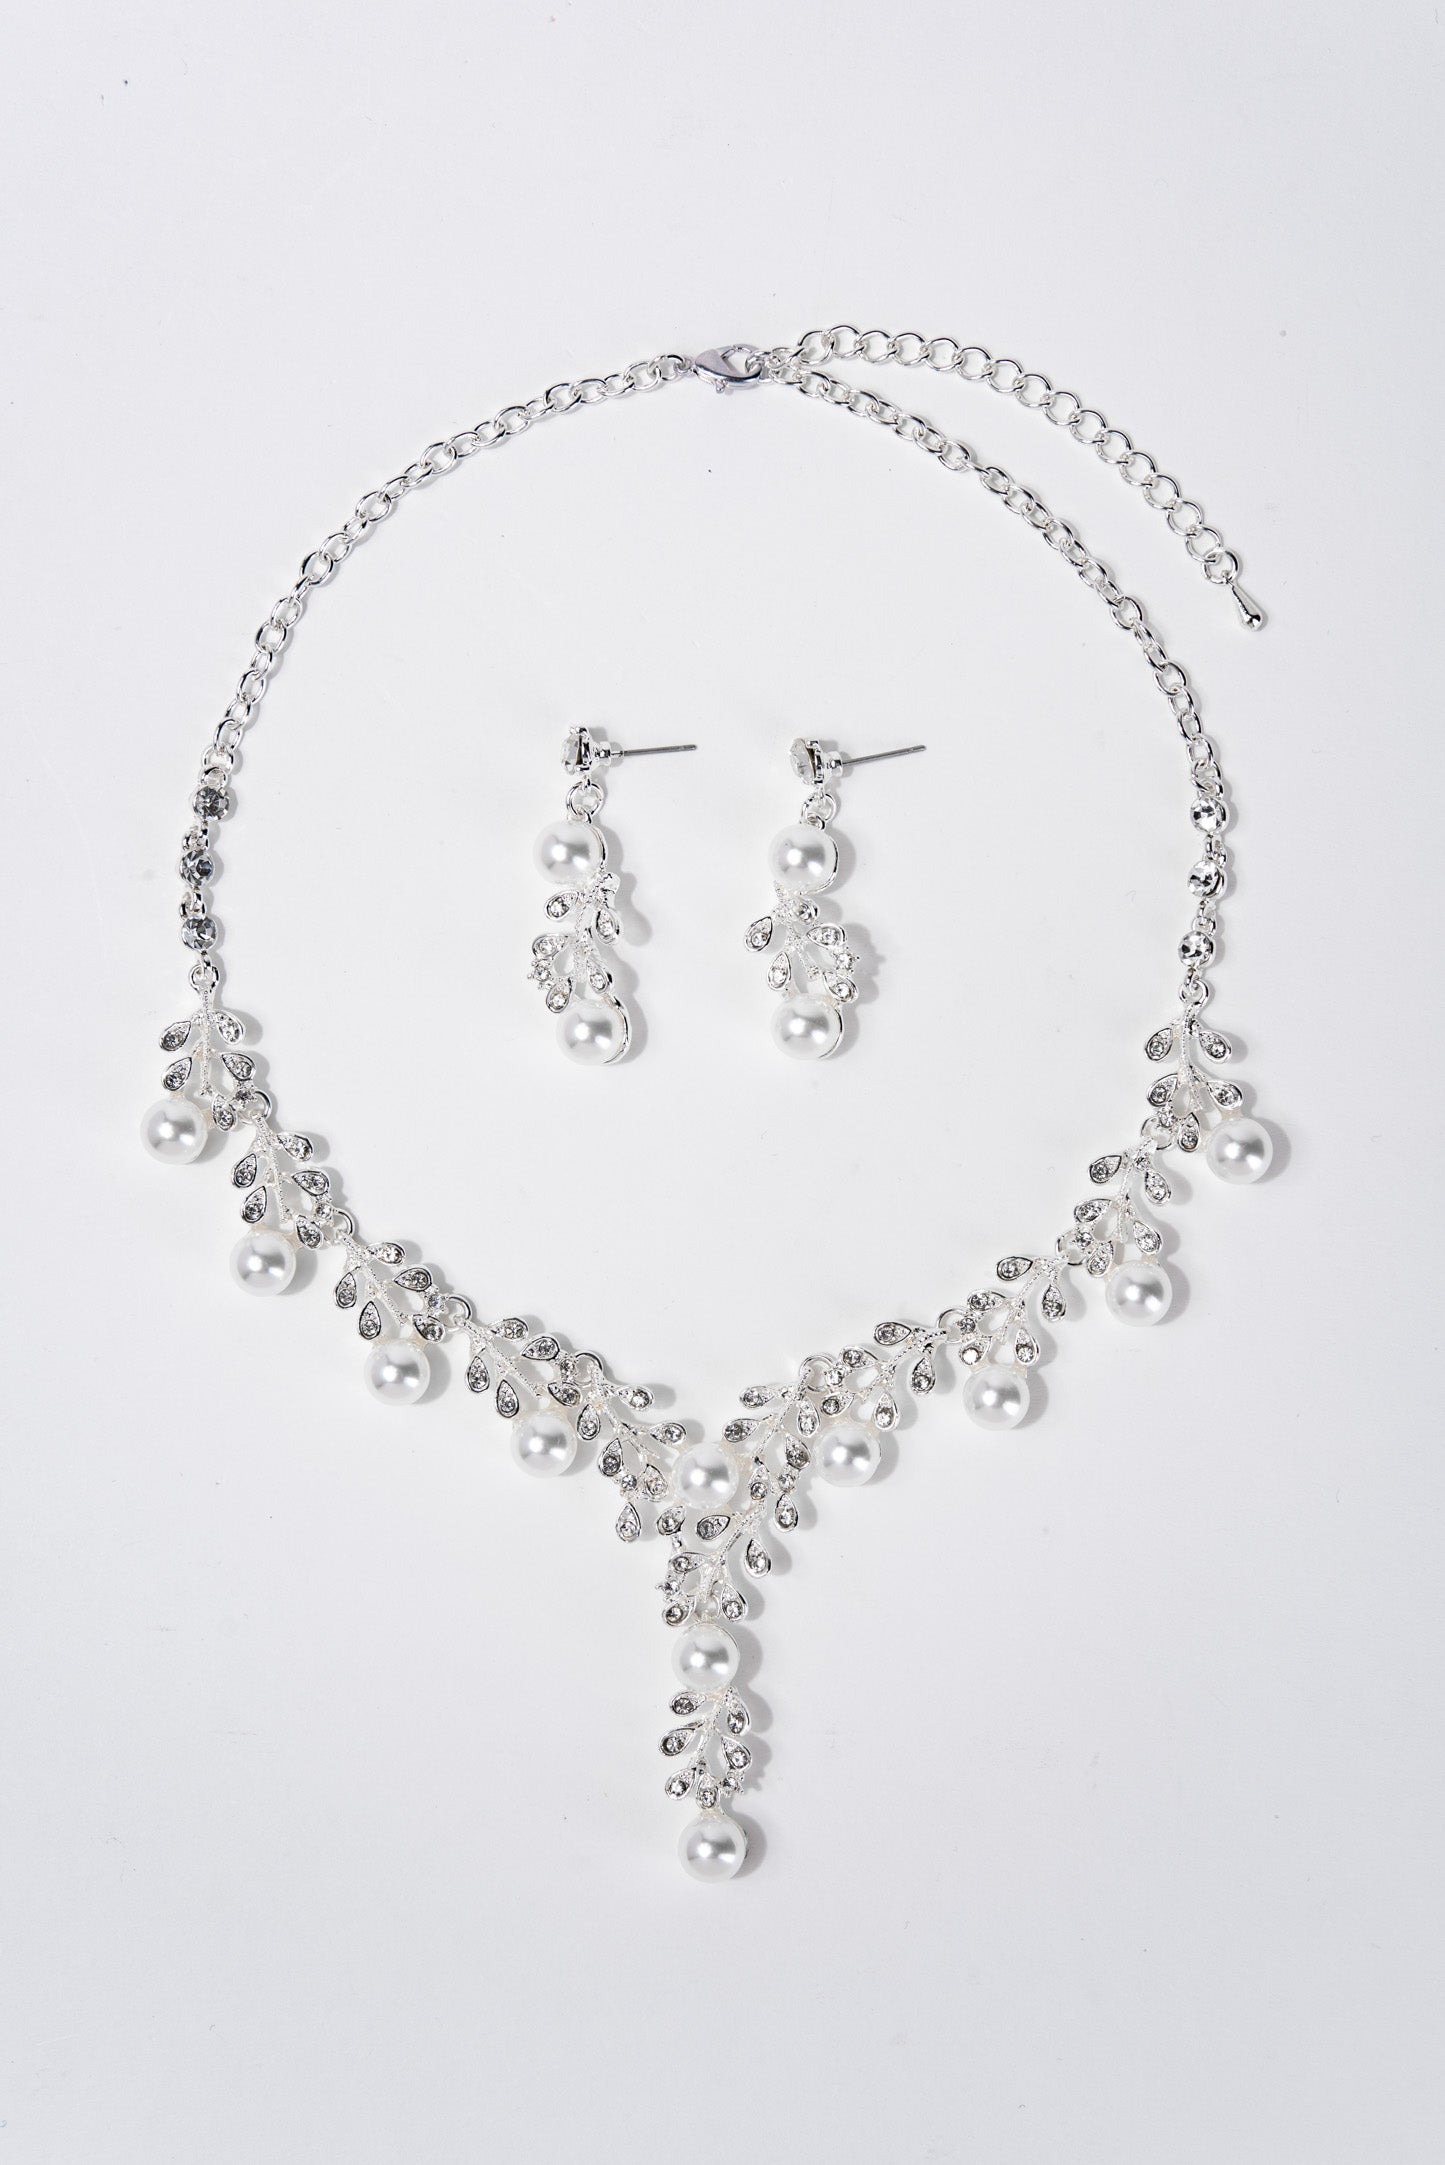 Daisy Elegant Rhinestone Pearl  Cluster Statement Necklace Set - Silver